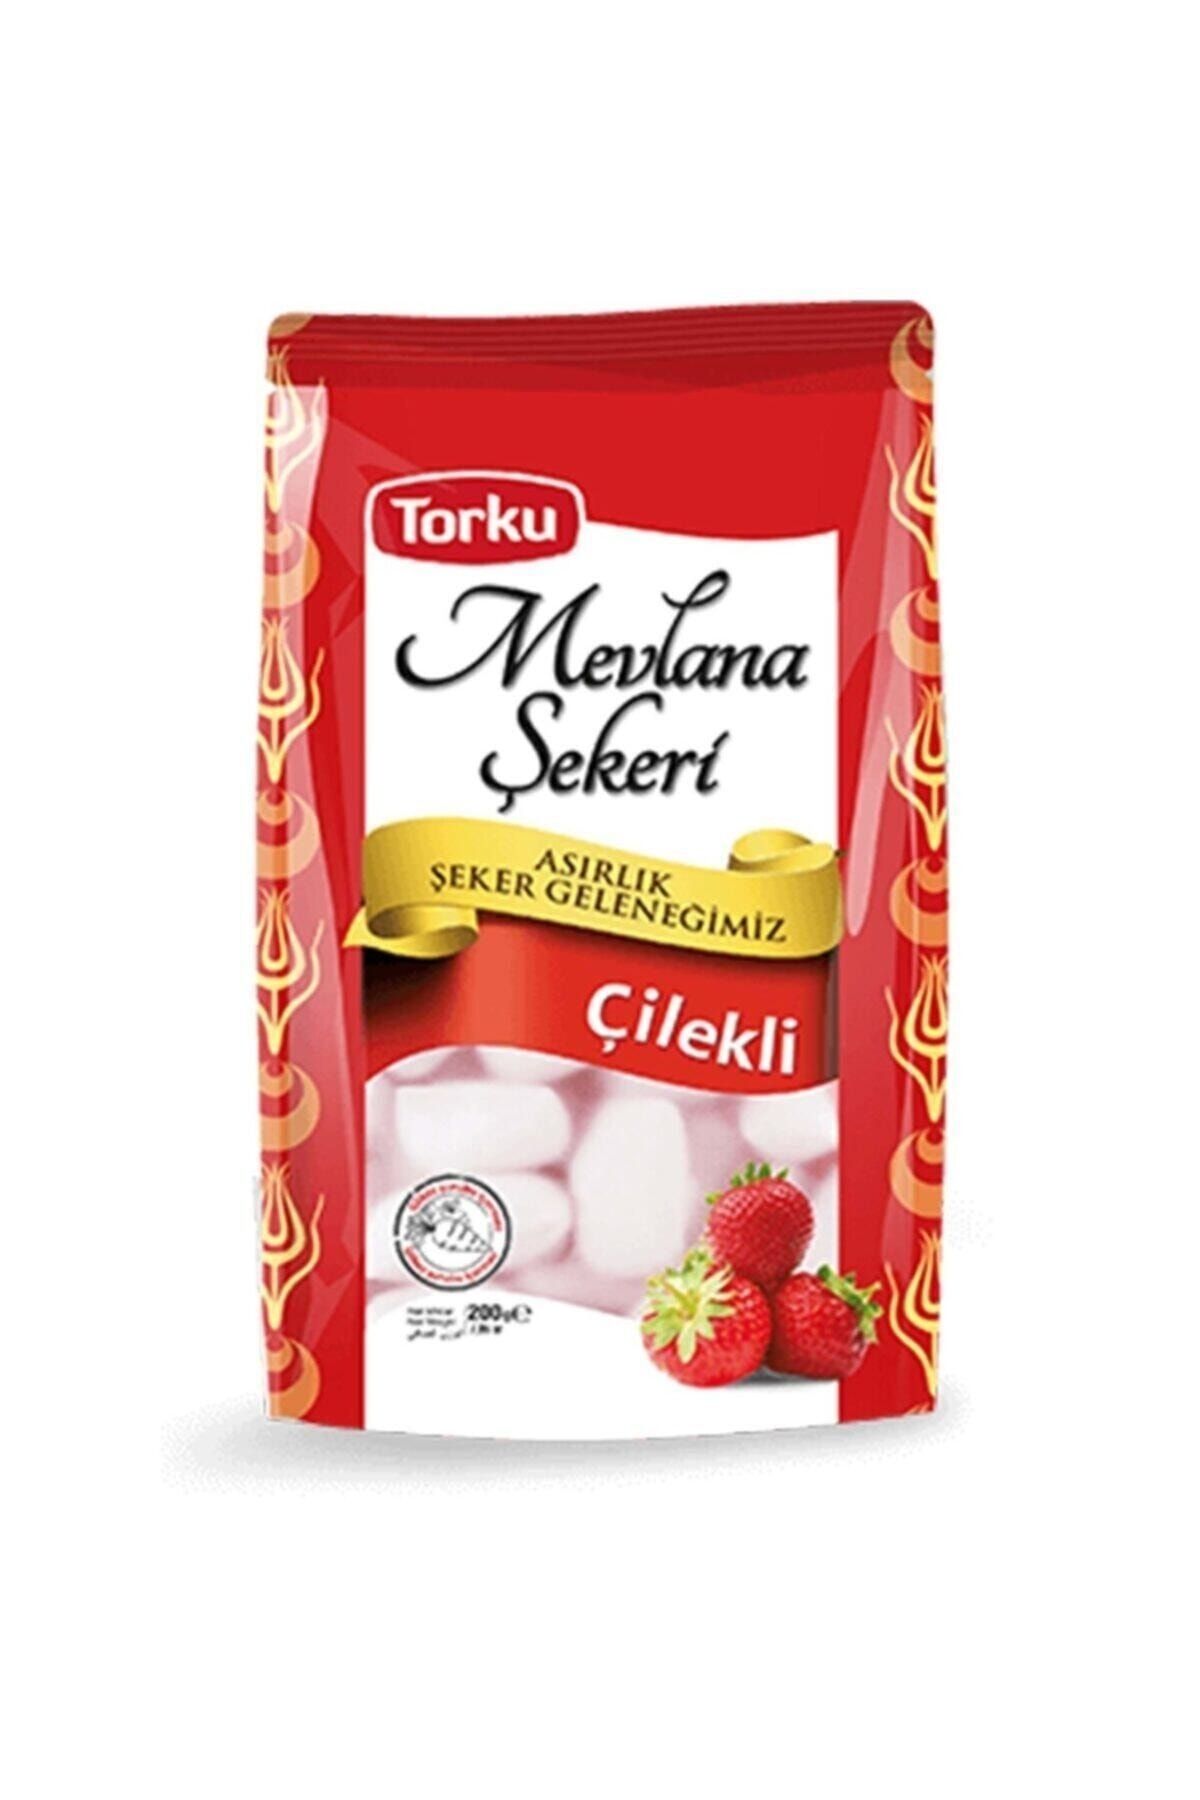 EGE STORE Torku Mevlana Şekeri Mix 2 Paket 450 gr